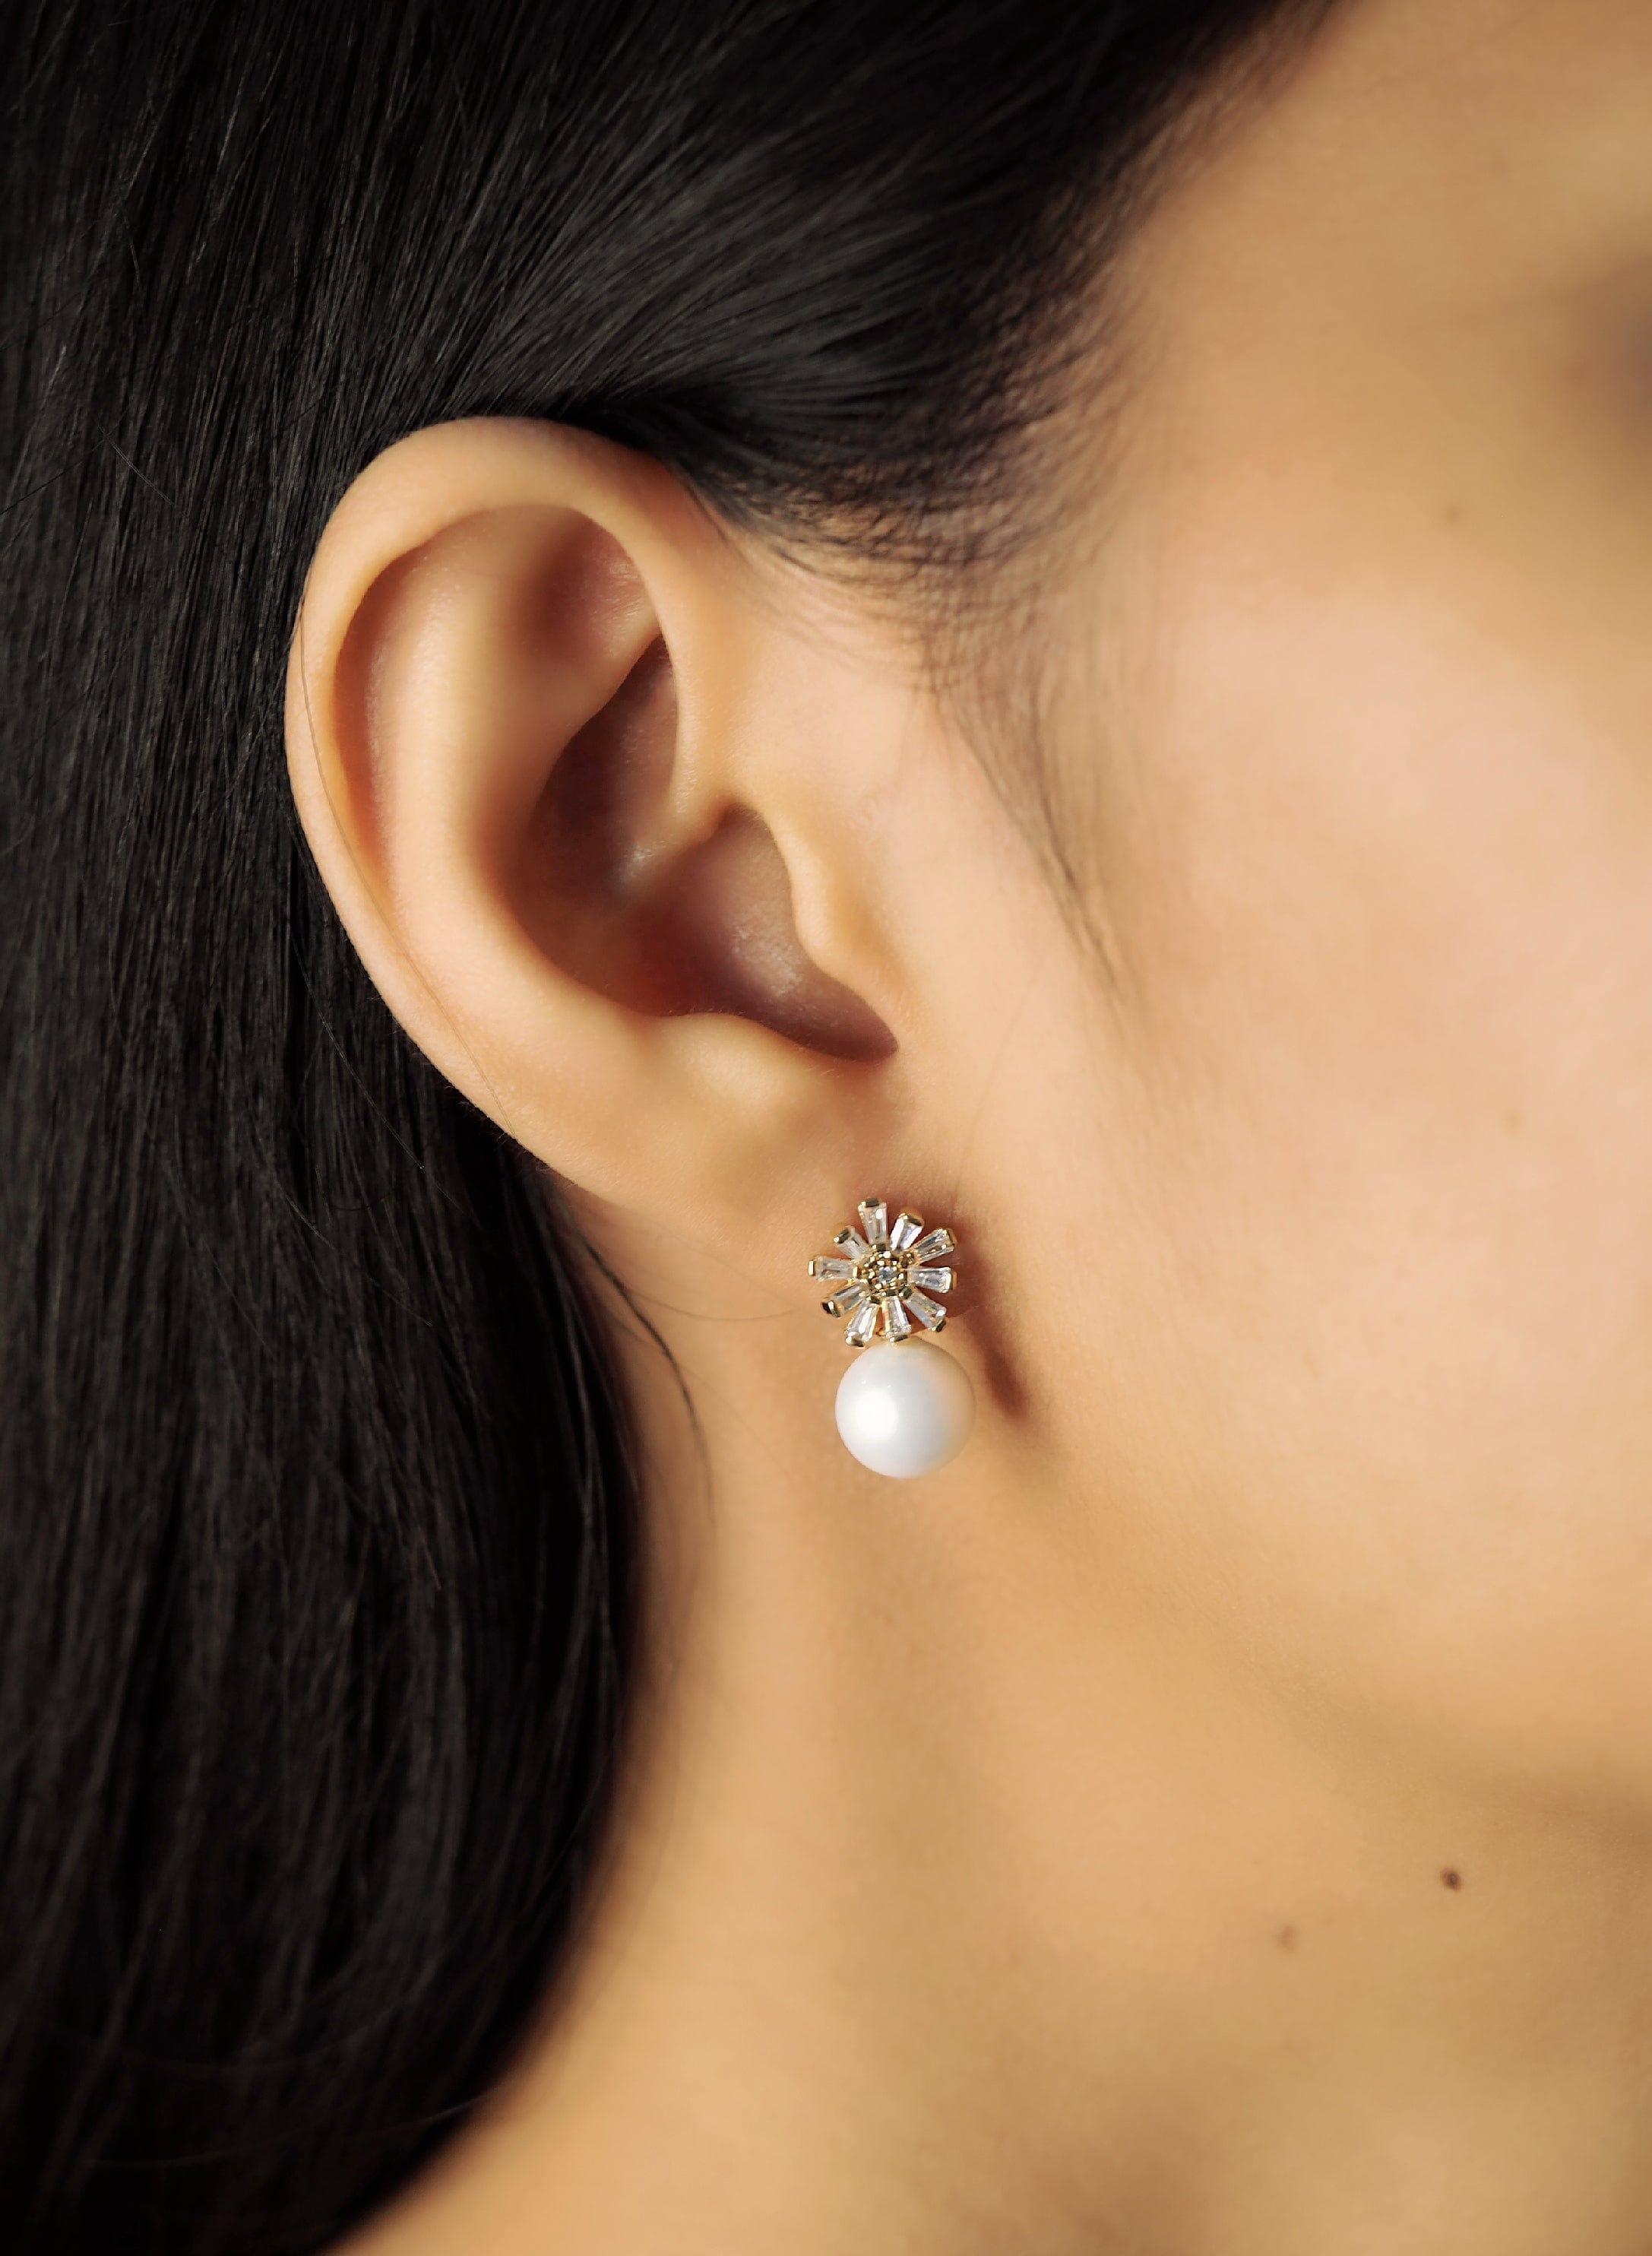 TAI JEWELRY Earrings Radiant Baguette With Pearl Drop Earring